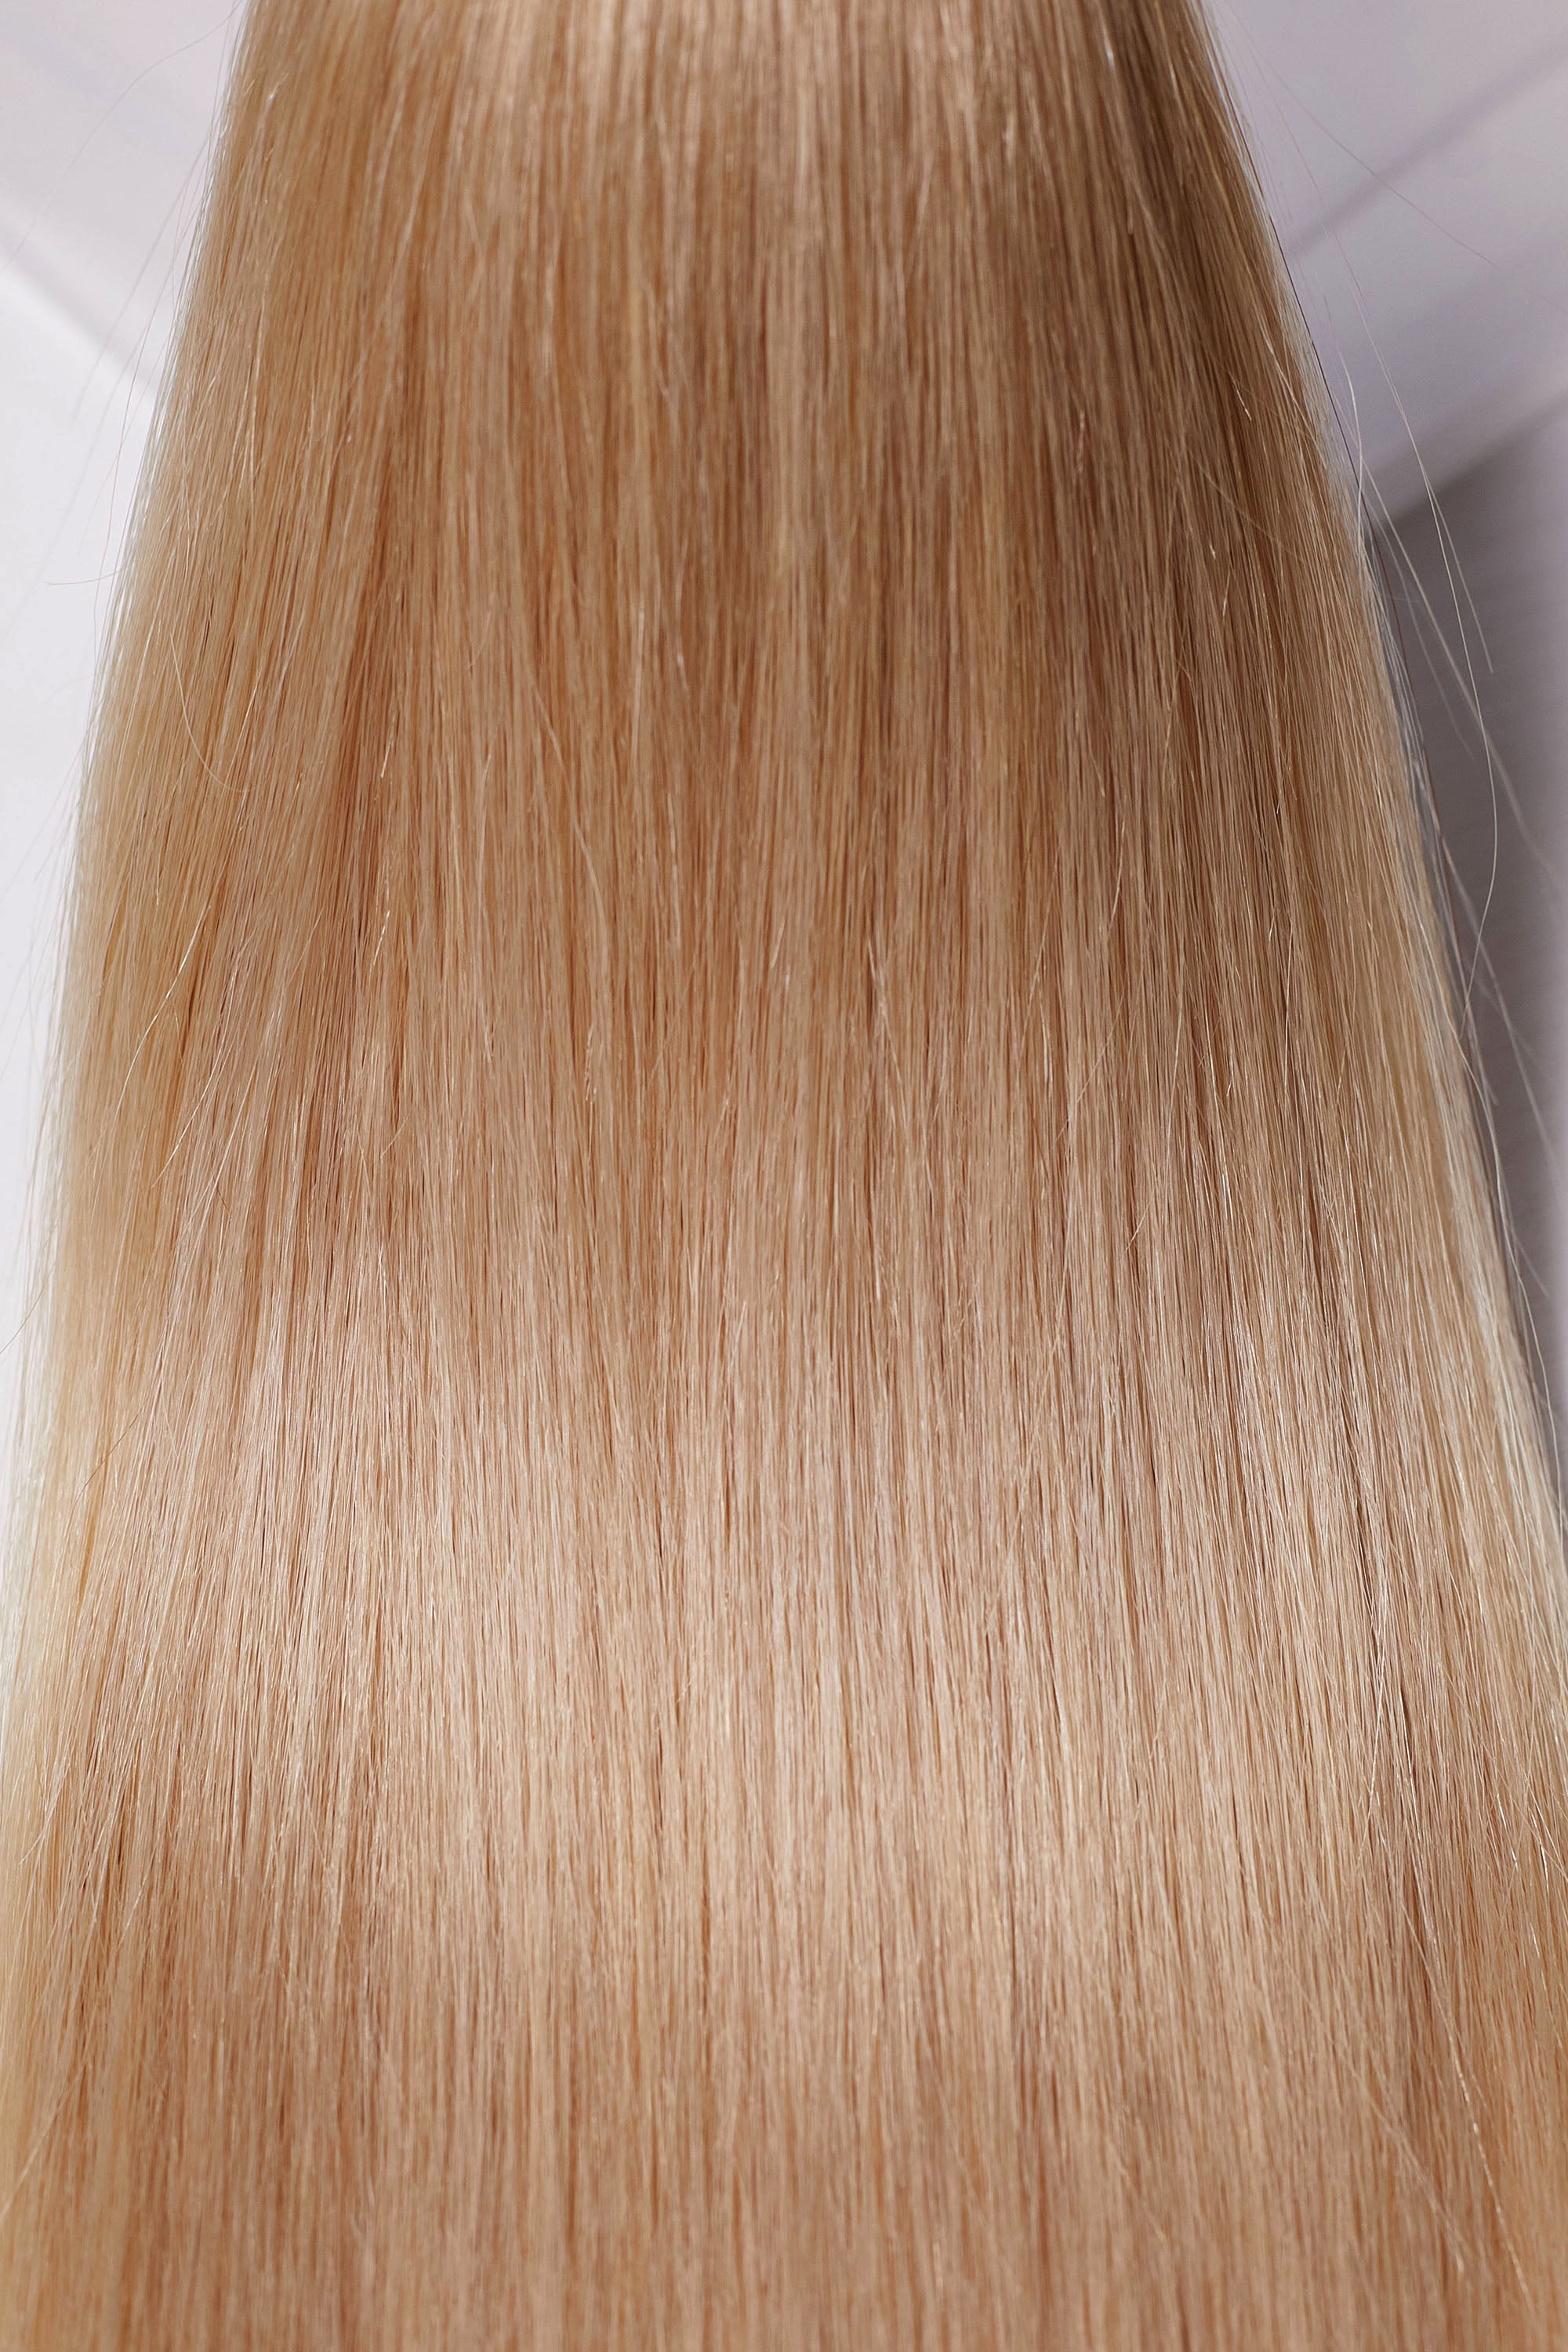 Behair professional Bulk hair "Premium" 28" (70cm) Natural Straight Light Gold Sand #16 - 25g hair extensions